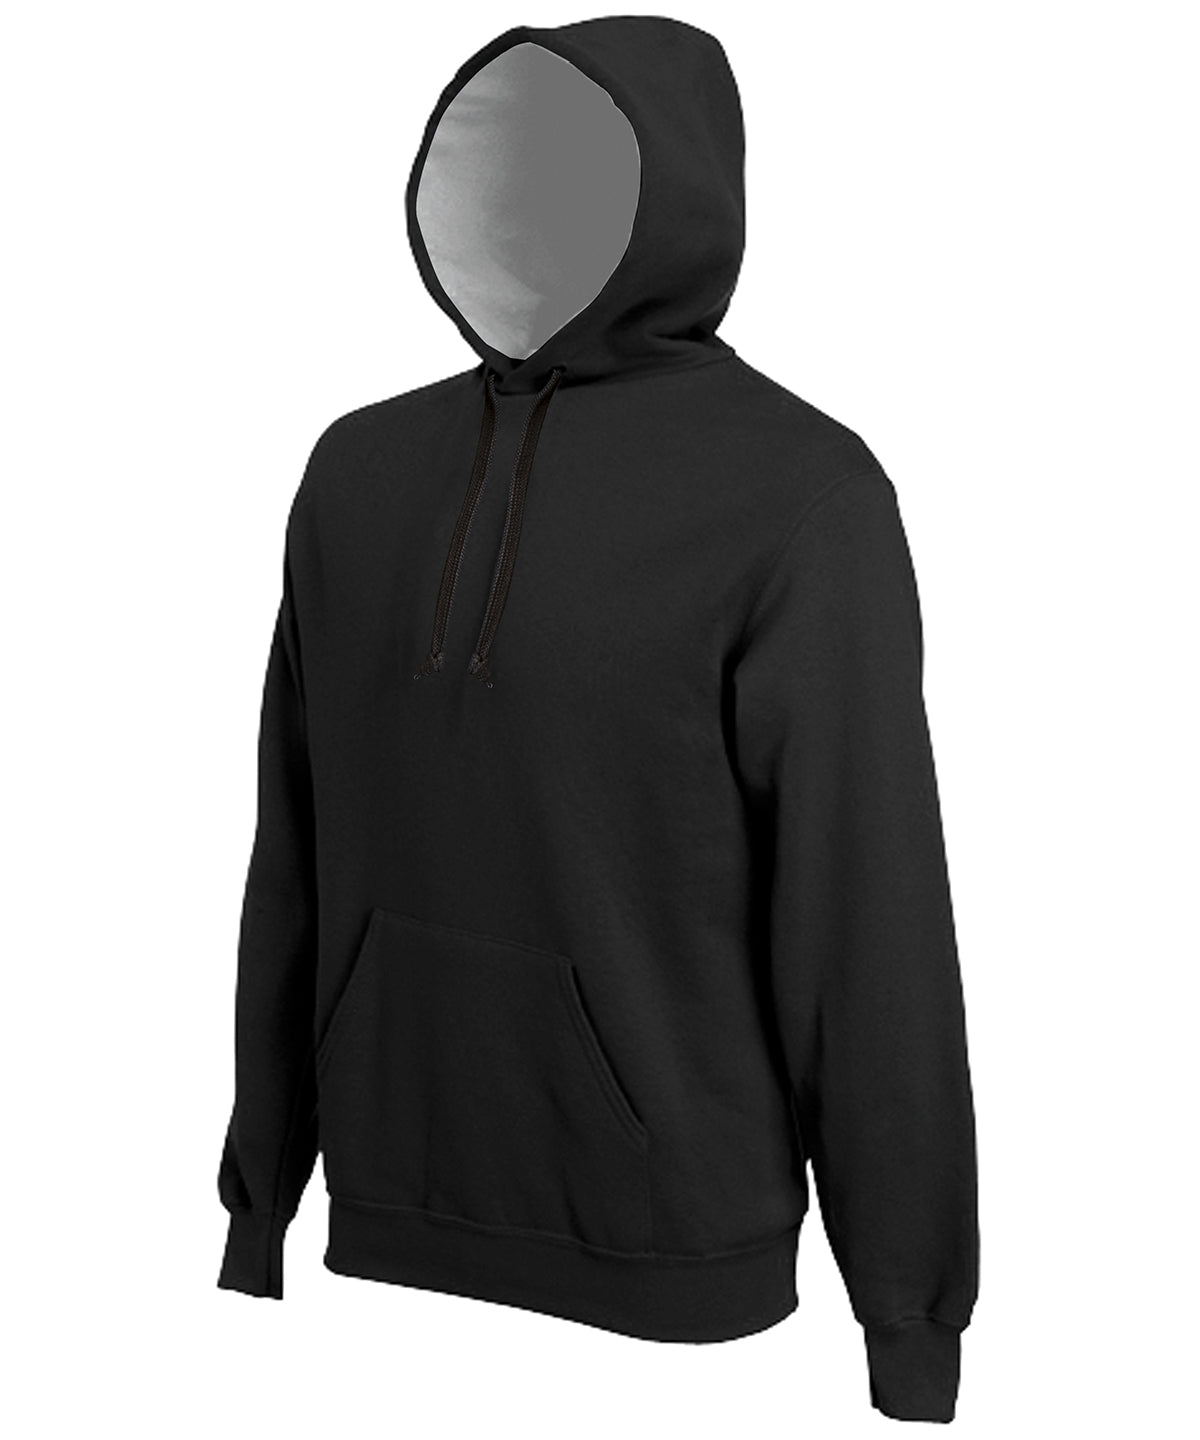 Hettupeysur - Hooded Sweatshirt